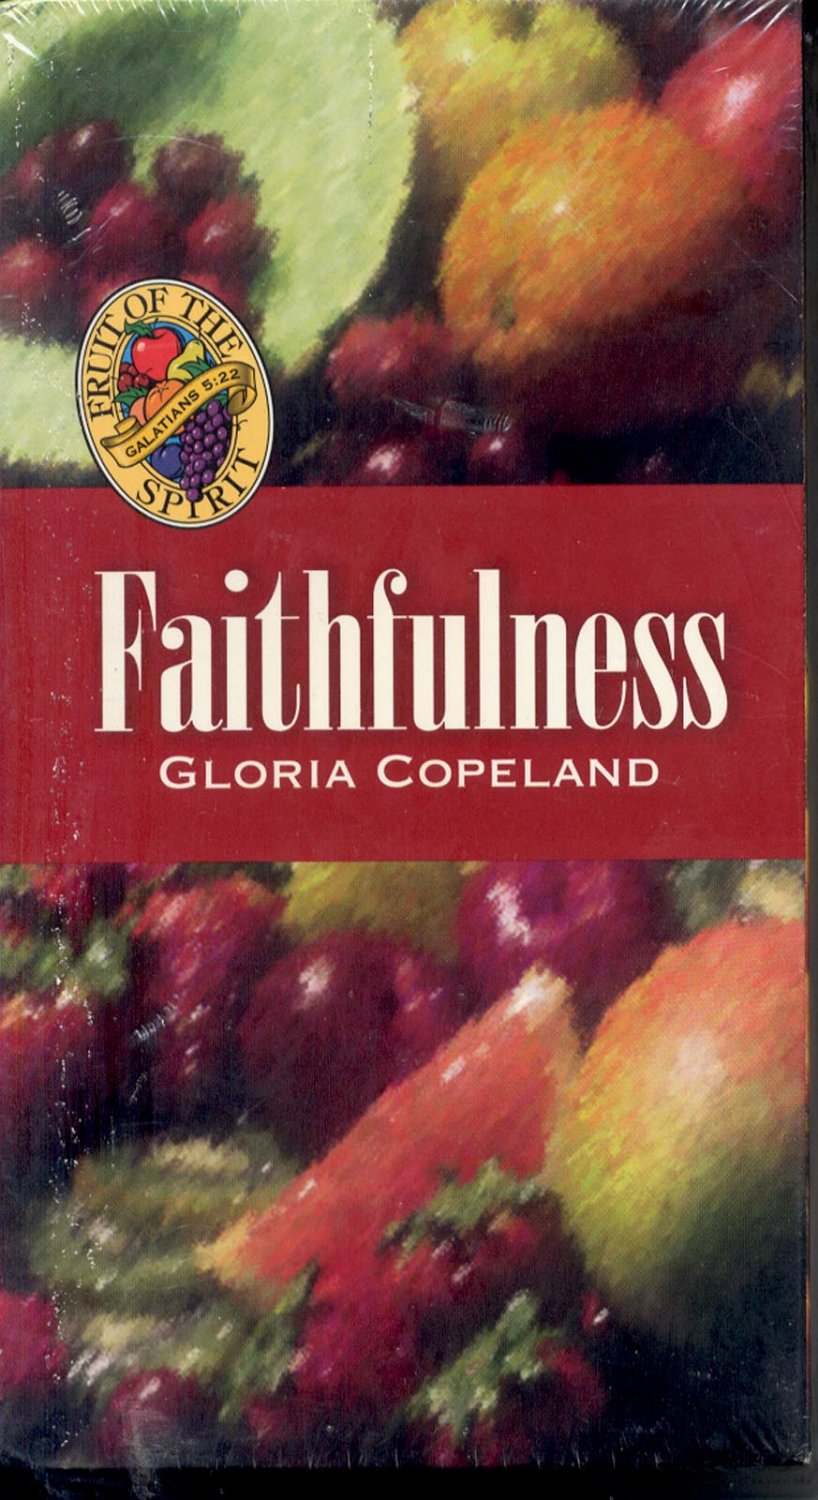 THE FRUIT OF THE SPIRIT ON FAITHFULNESS BY GLORIA COPELAND 2 VHS SET FACTORY SEALED NEW OLD STOCK